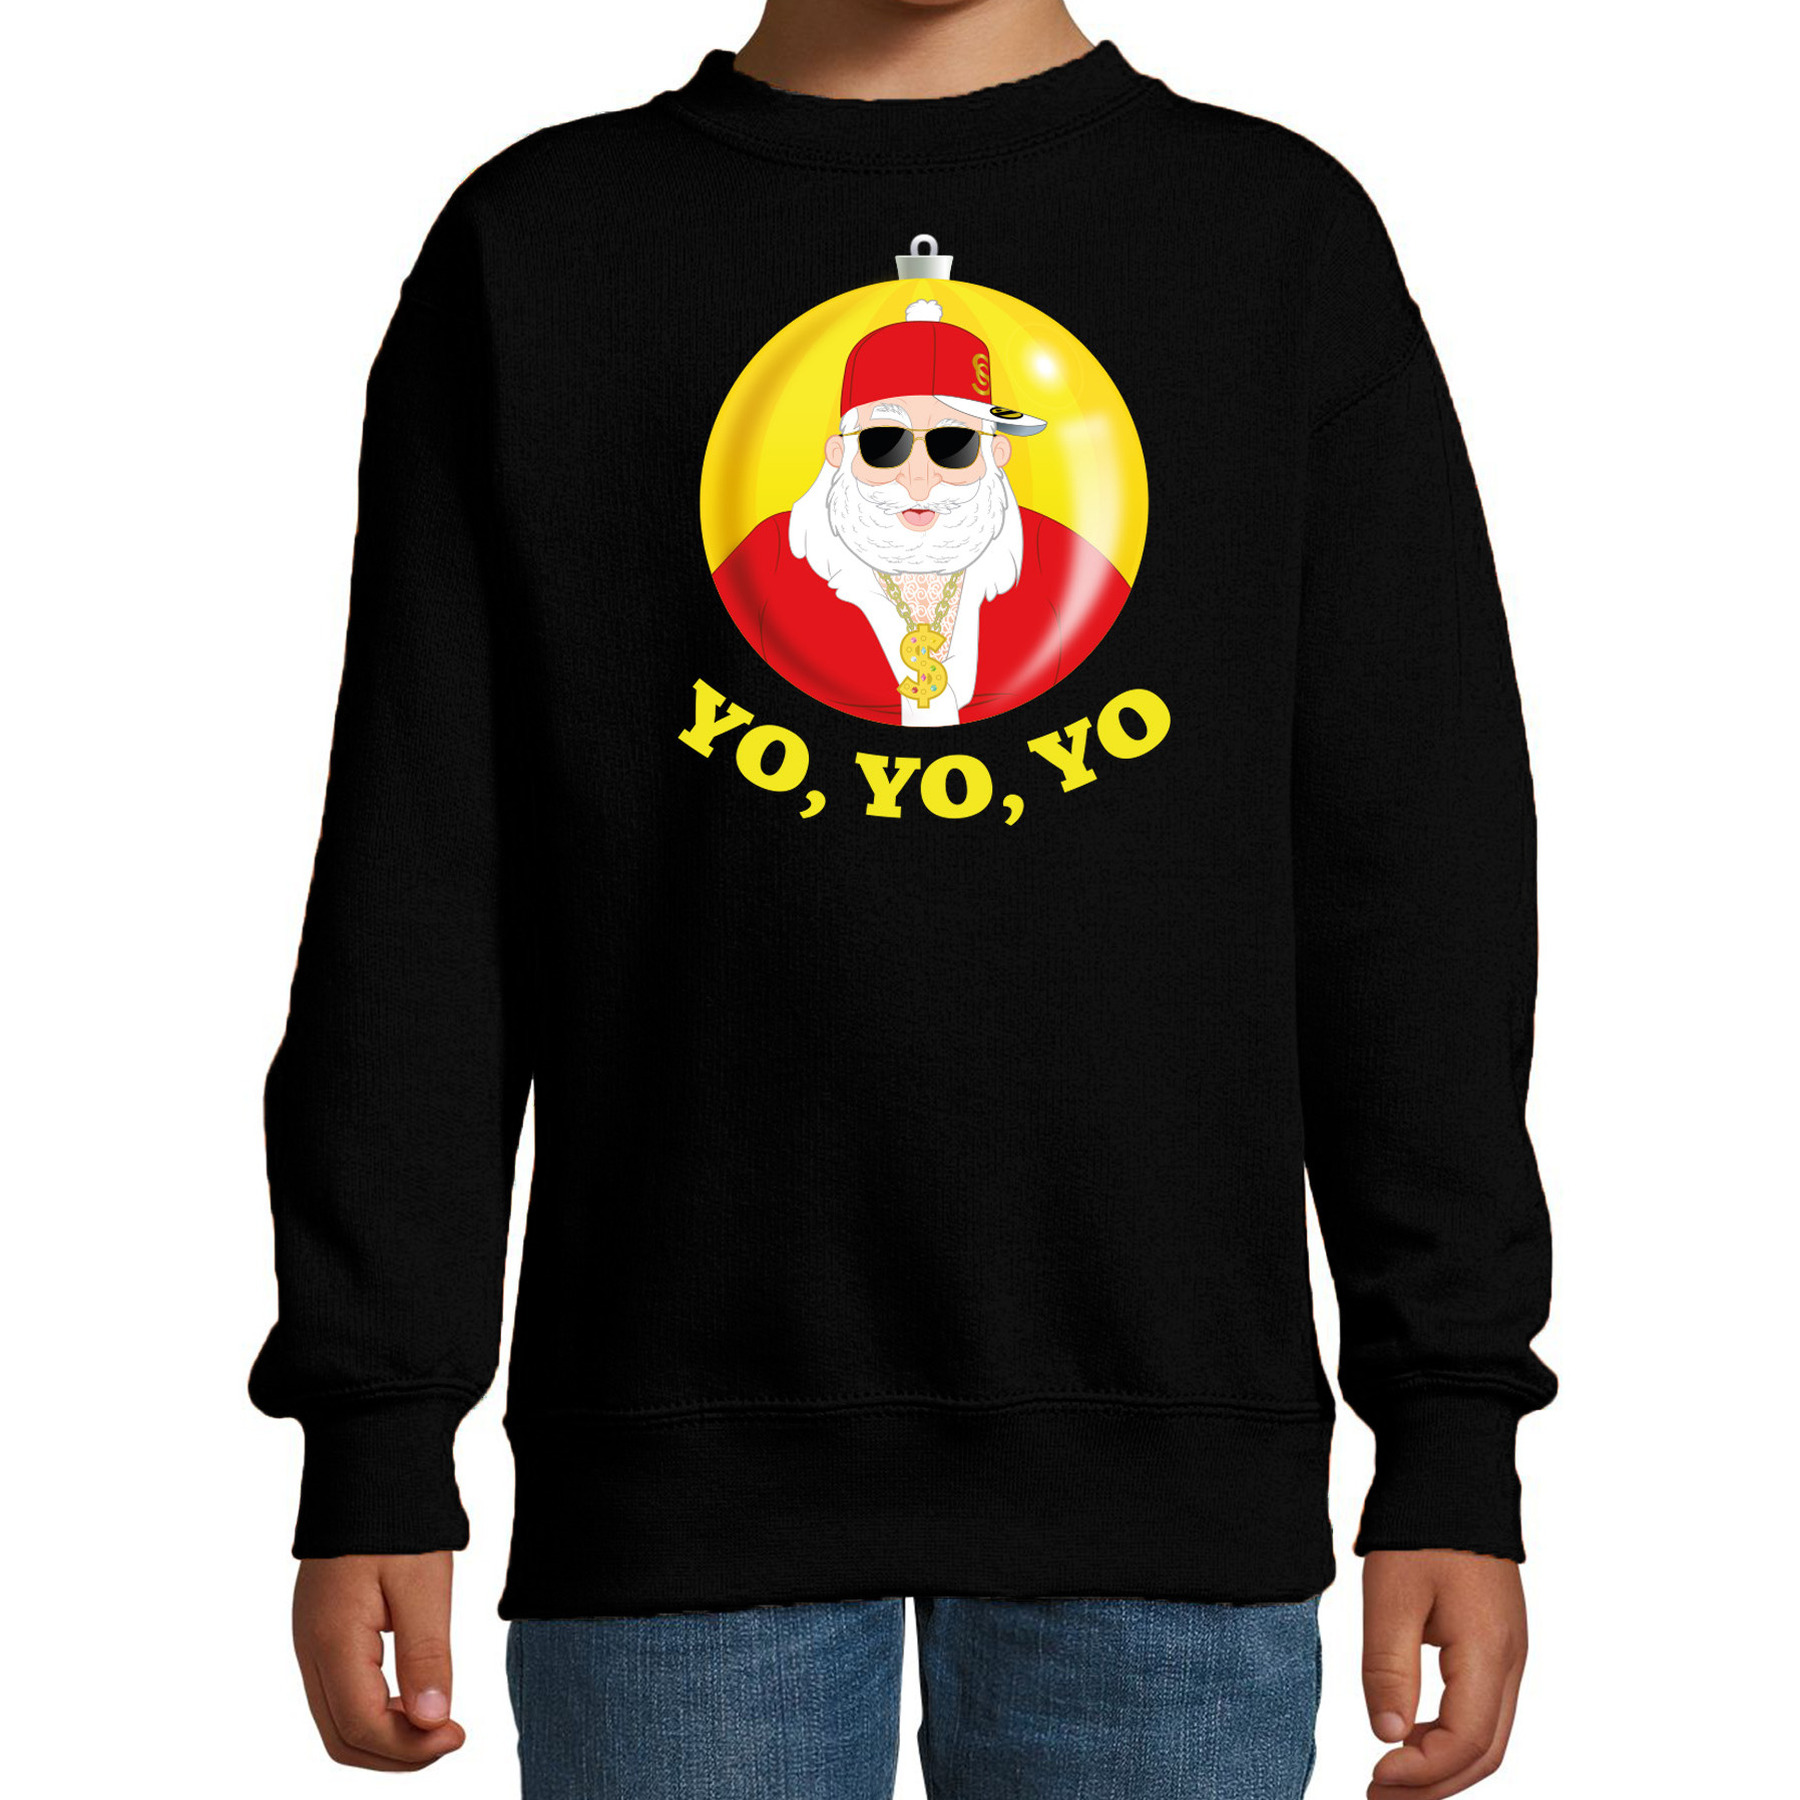 Kersttrui-sweater voor kinderen Kerstman zwart Yo Yo Yo